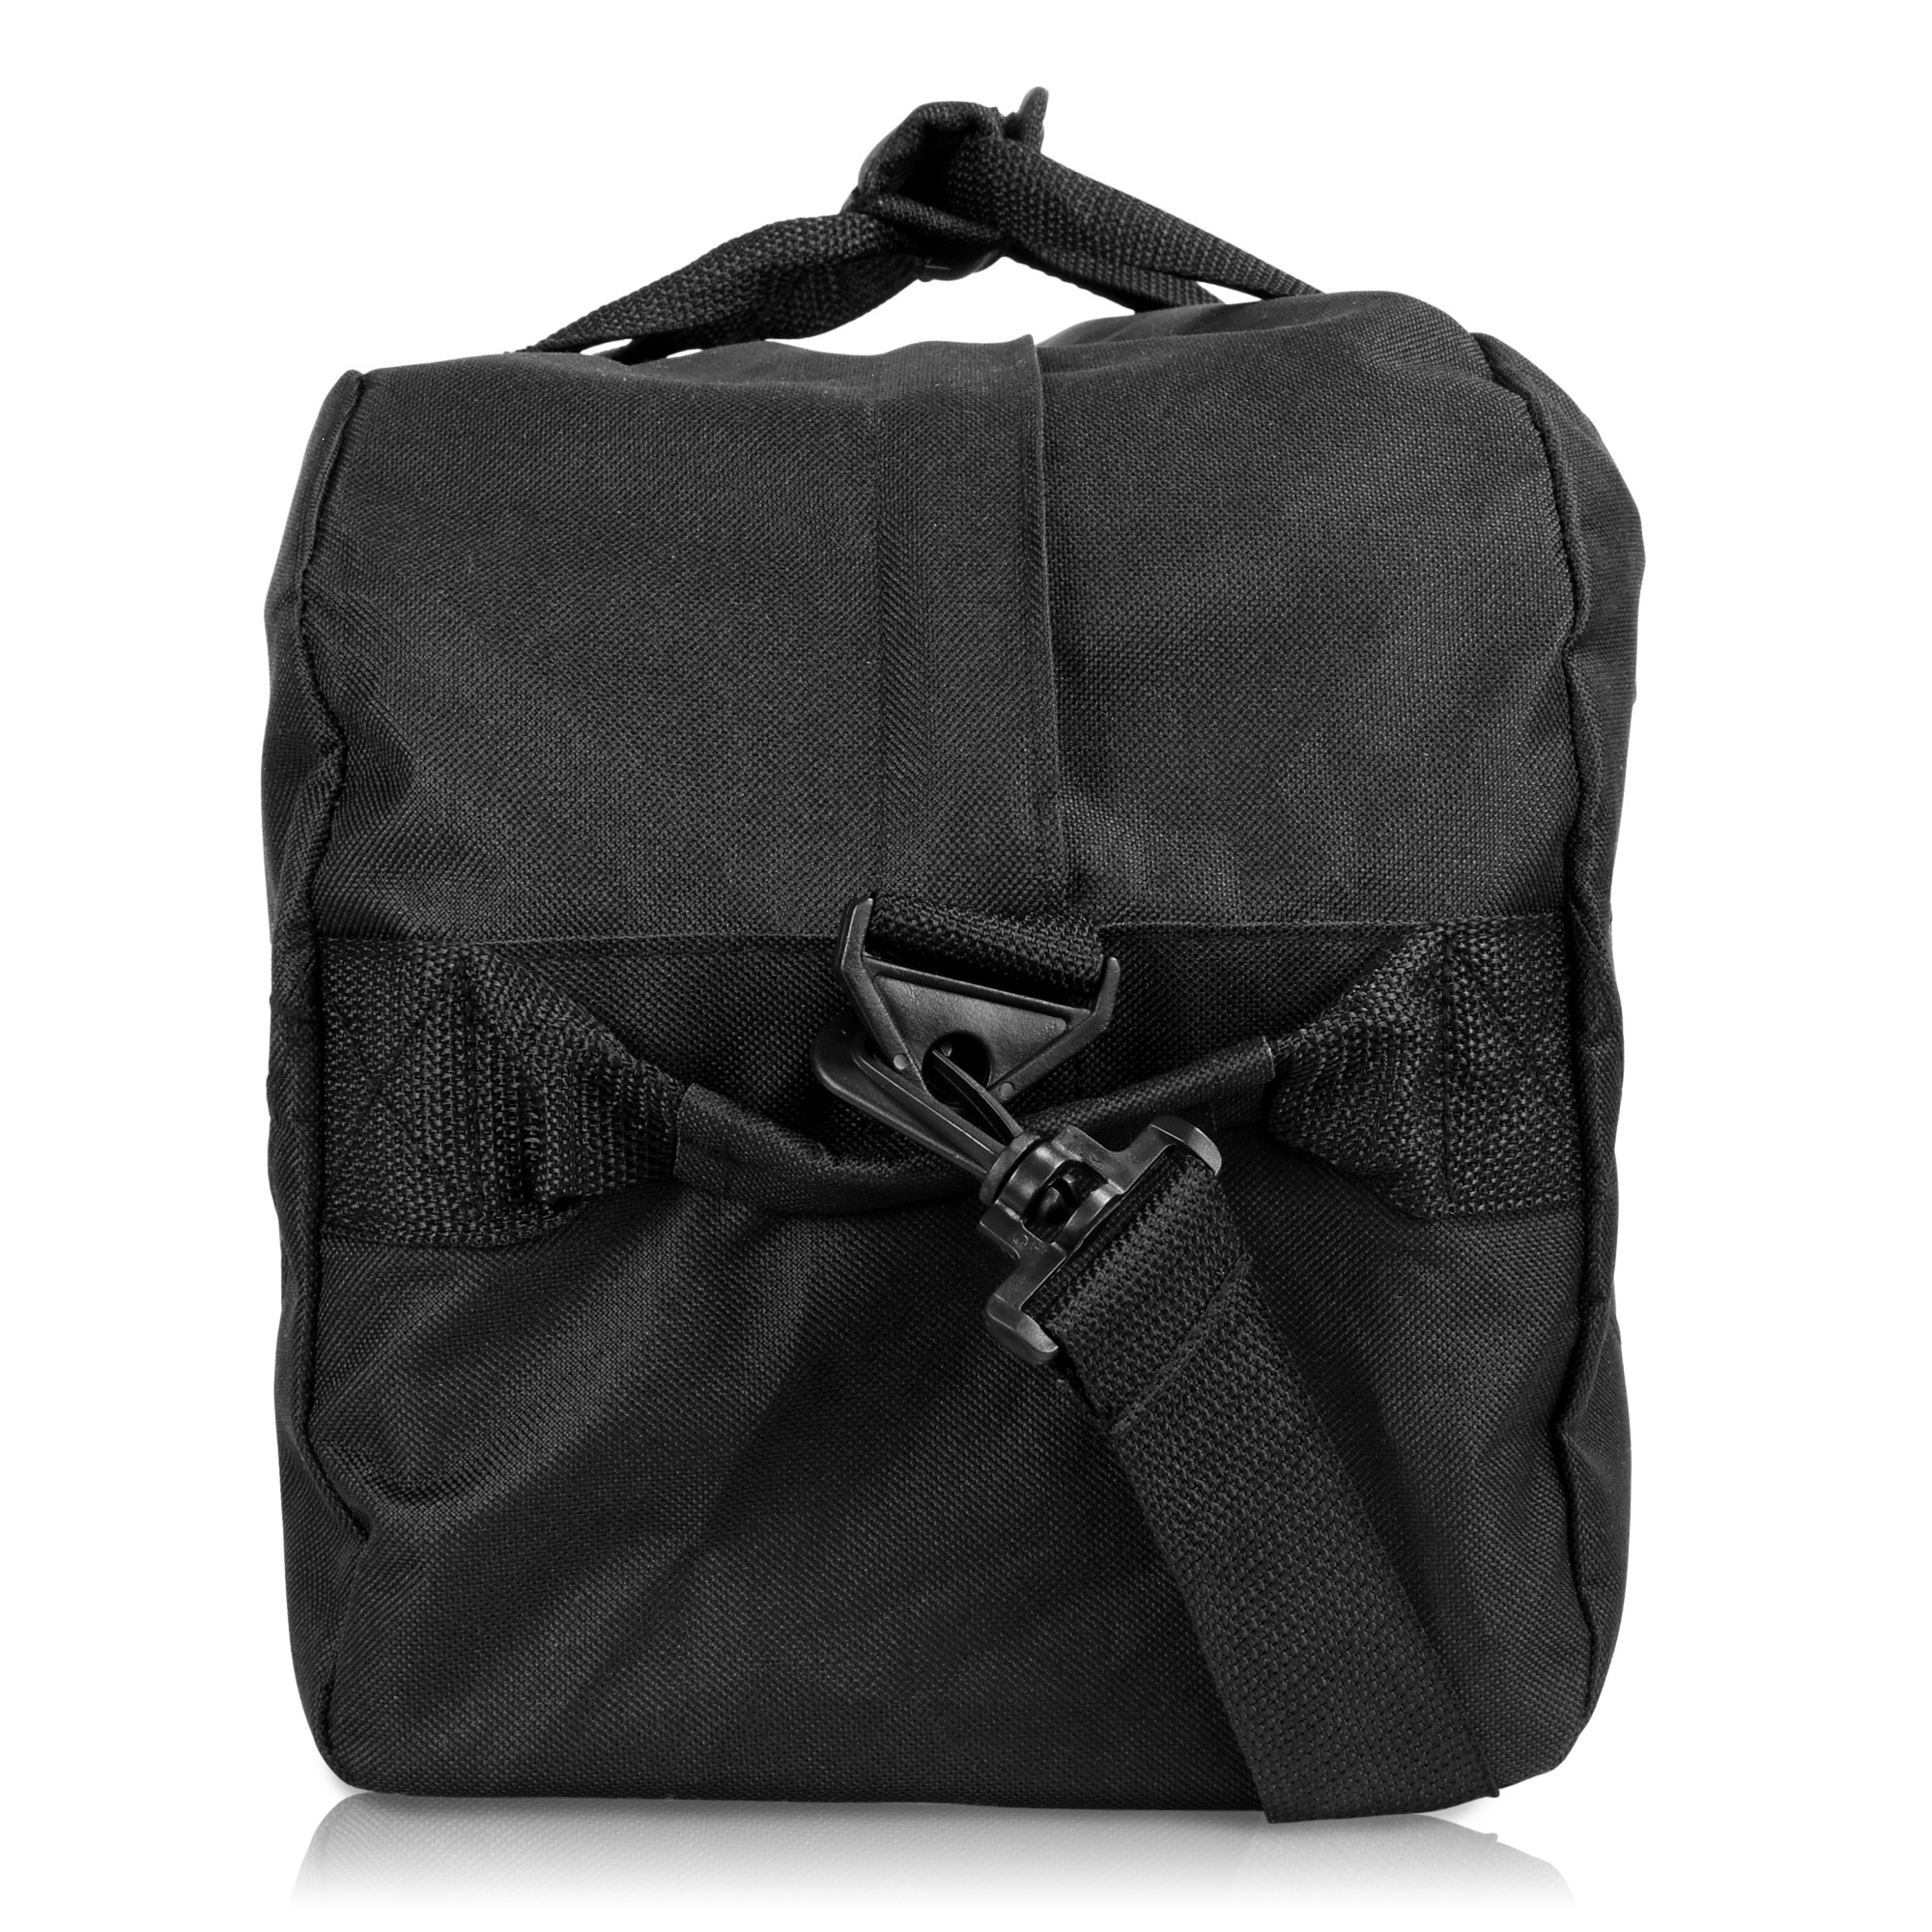 DALIX 18" Duffle Bag Two-Tone Sports Travel Gym Luggage Bag in Black - image 4 of 5